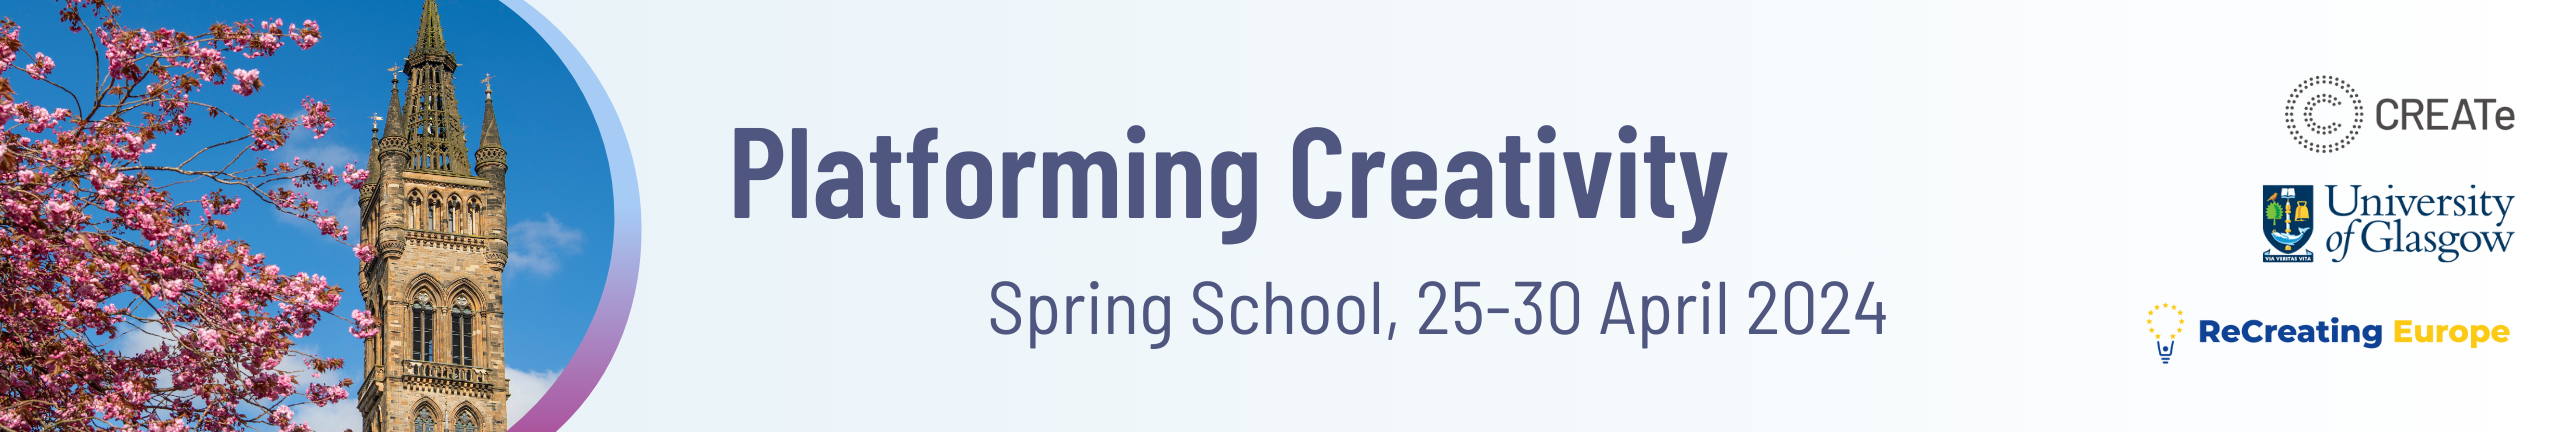 CREATe Spring School banner